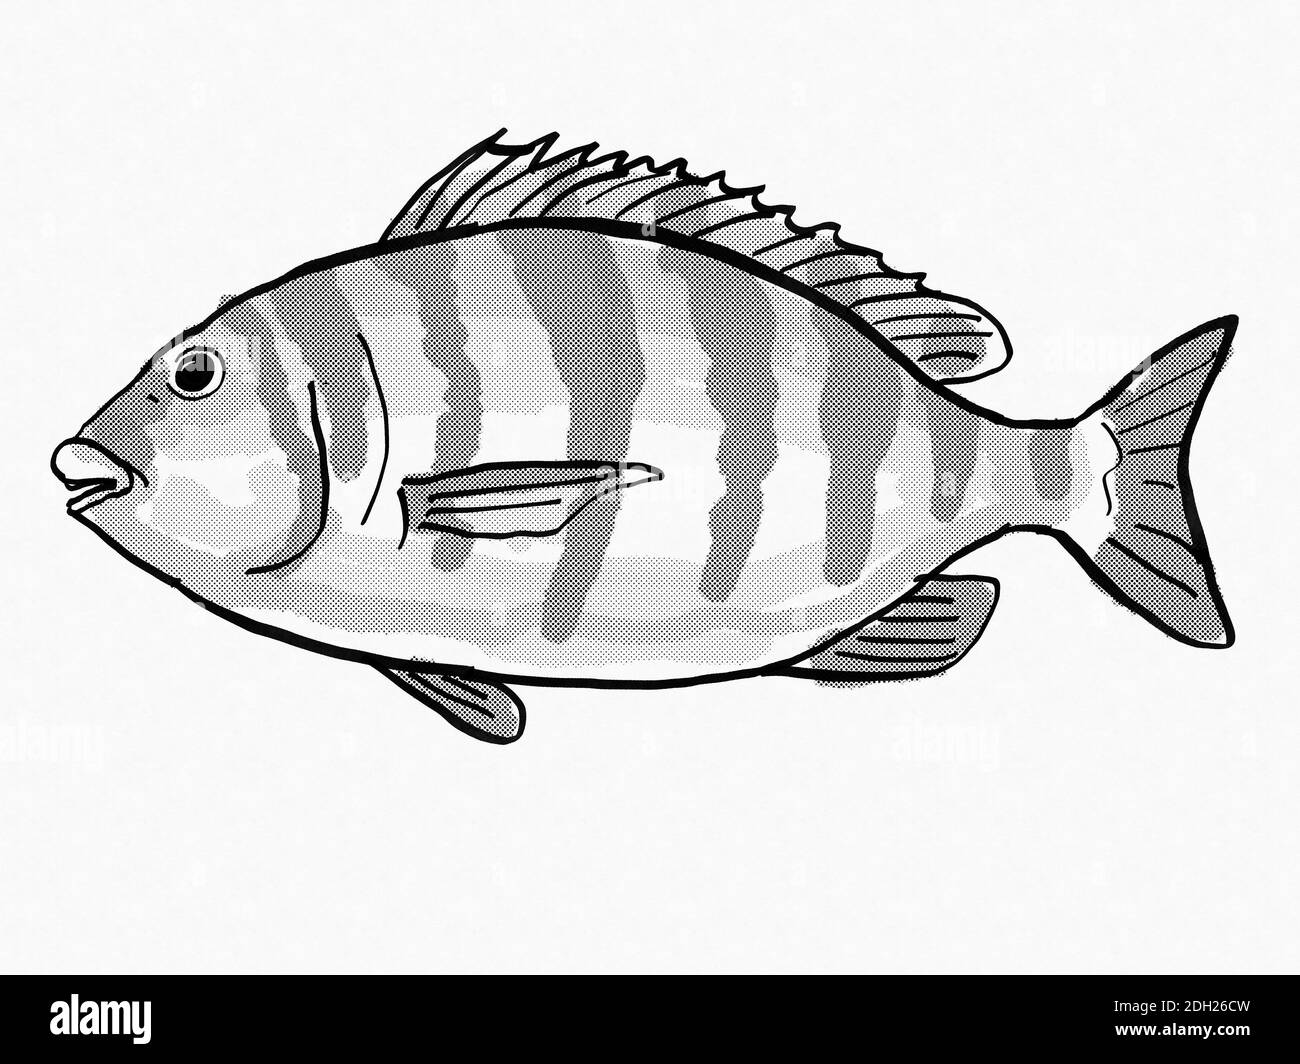 Sheepshead dessin rétro de dessin de dessin de dessin de dessin de dessin de poisson côtier de Caroline du Sud Banque D'Images